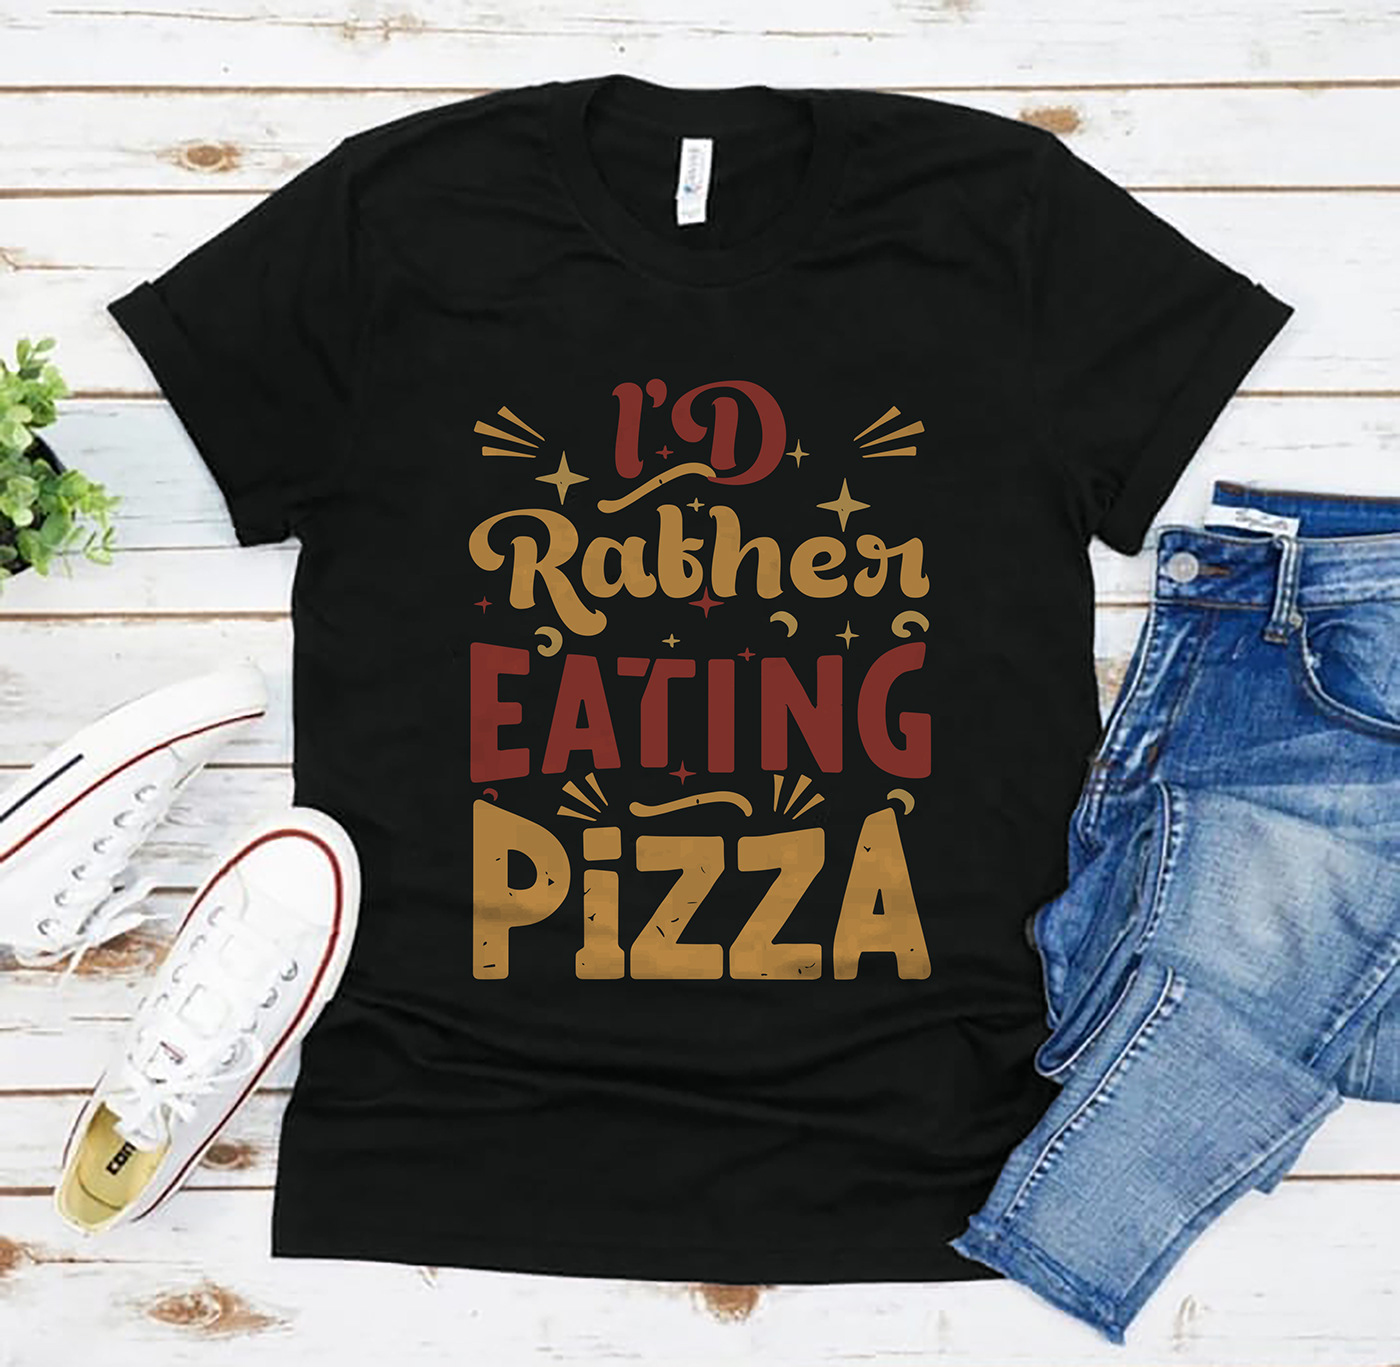 Custom Food T-shirt Designs